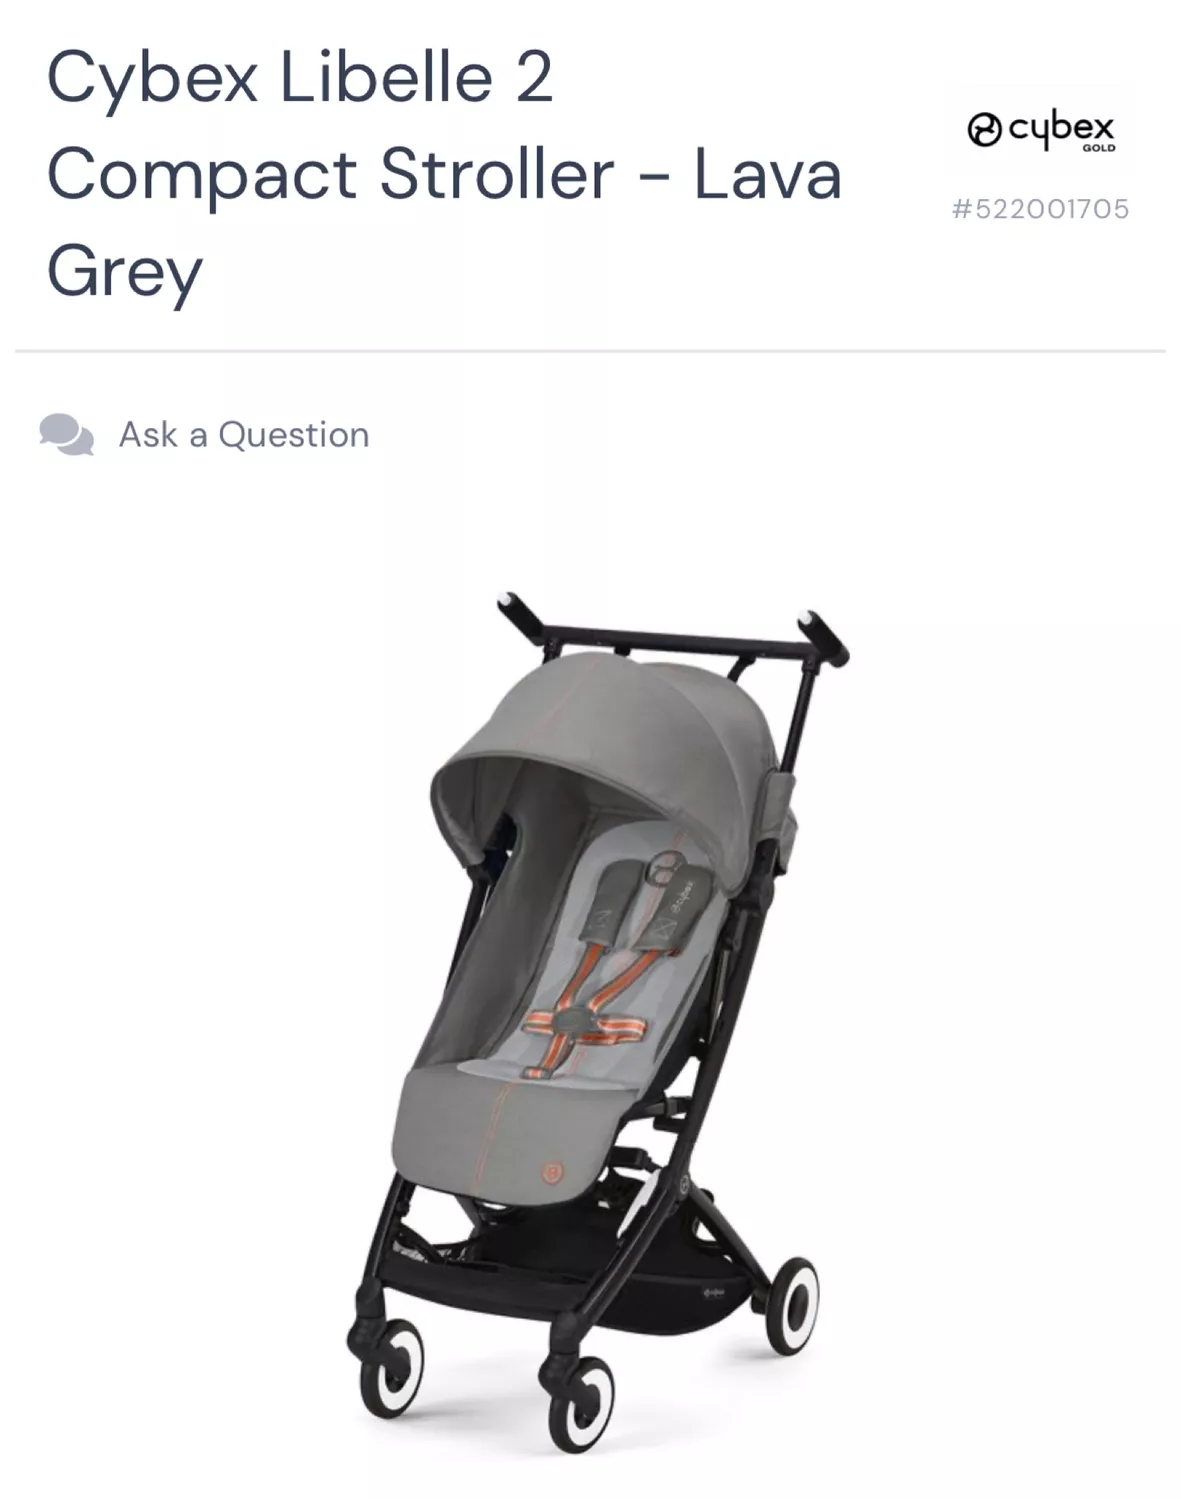 Cybex Libelle 2 Compact Stroller - Lava Grey